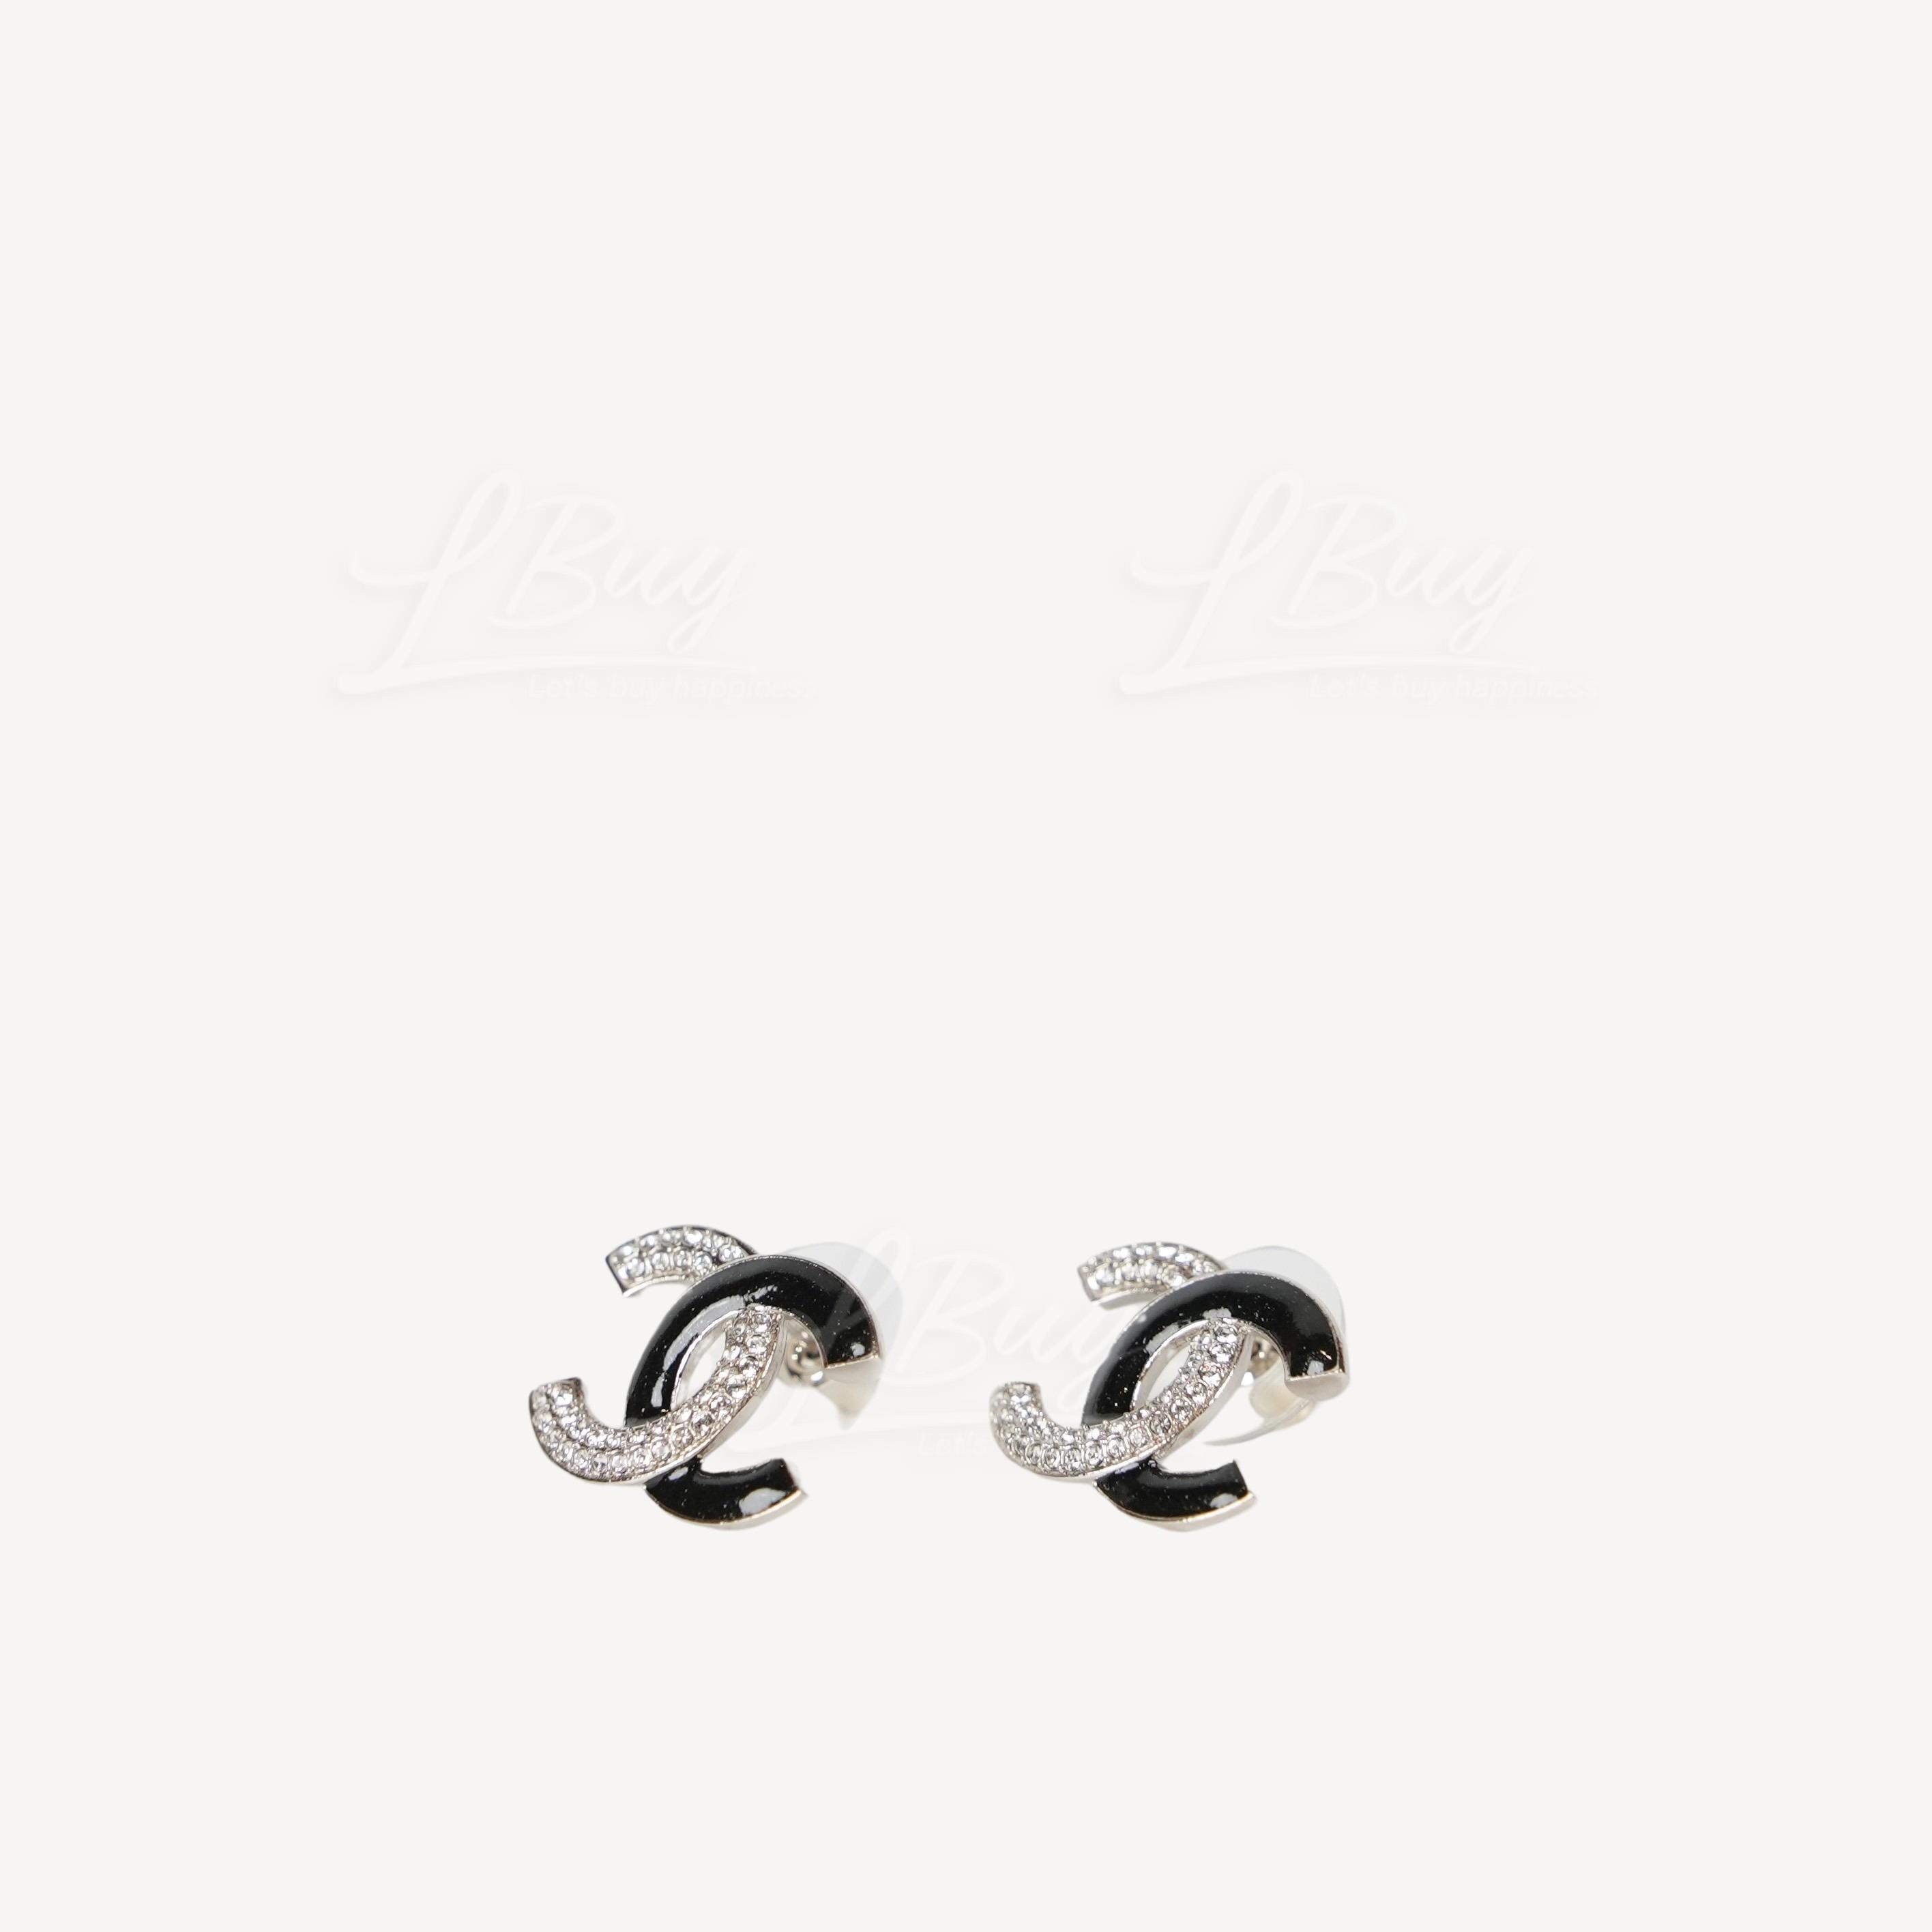 CHANEL CHANEL Earrings with CC Logo (AB9641 B09609 NL143)